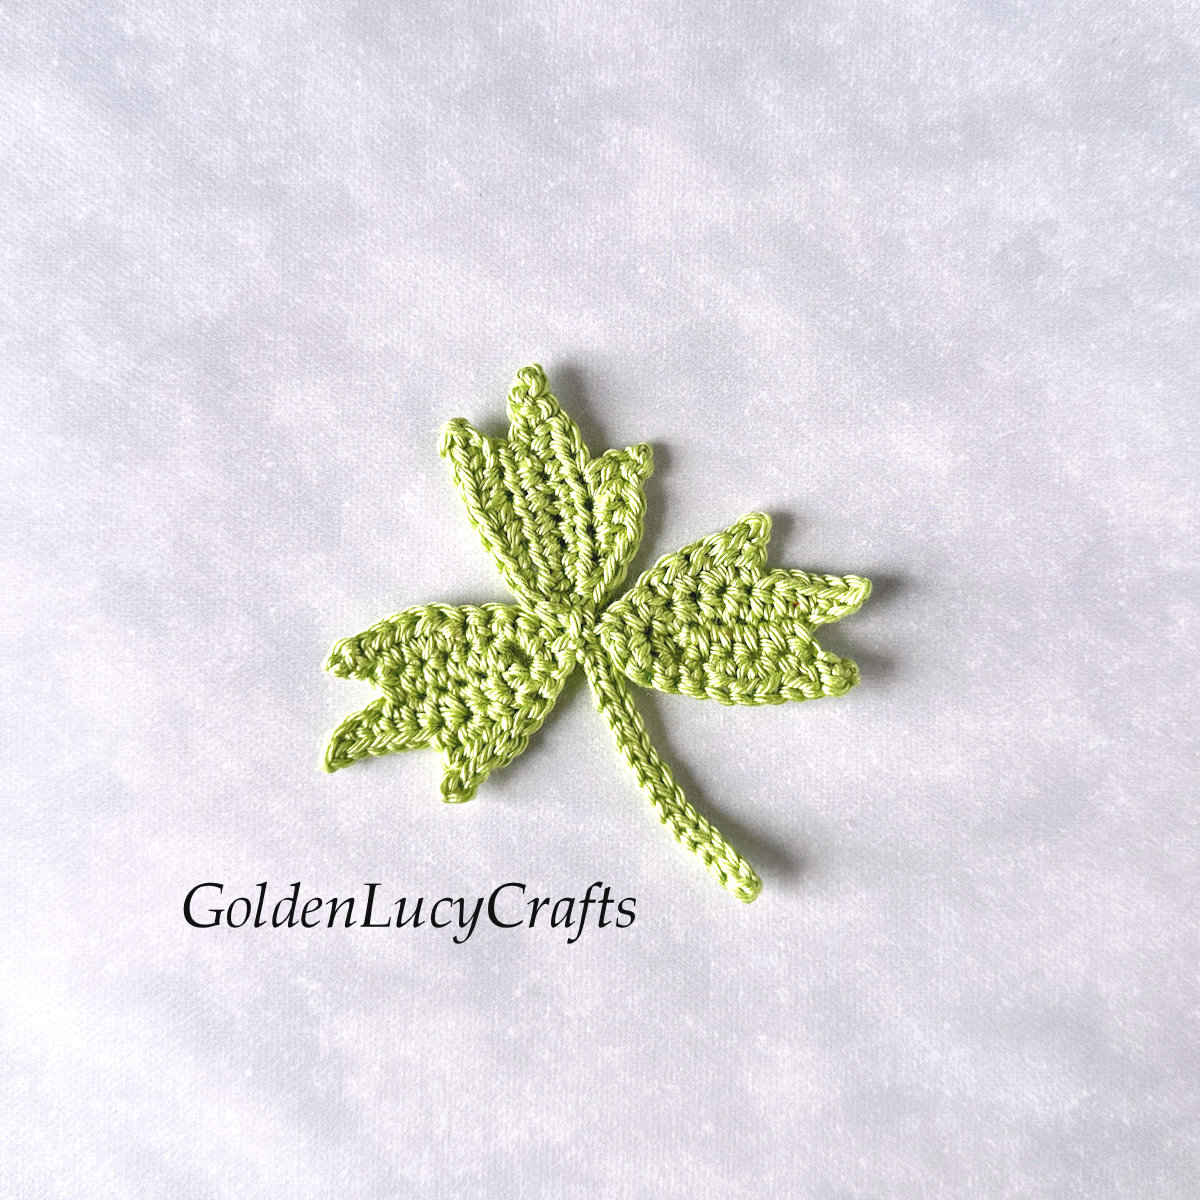 Crocheted pale green leaf.